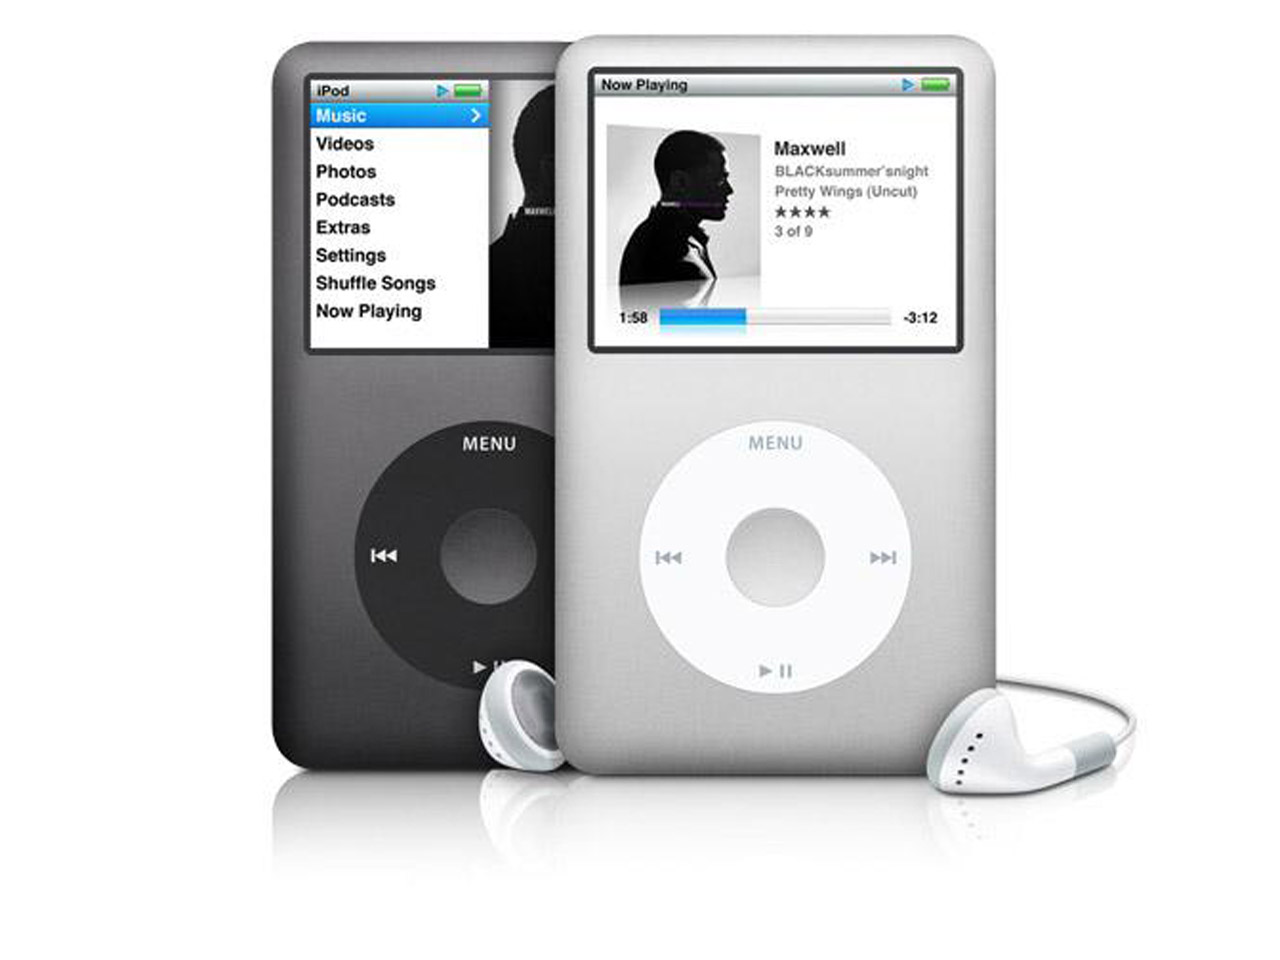 La rueda de clic ya no existe: Apple mata silenciosamente al iPod Classic